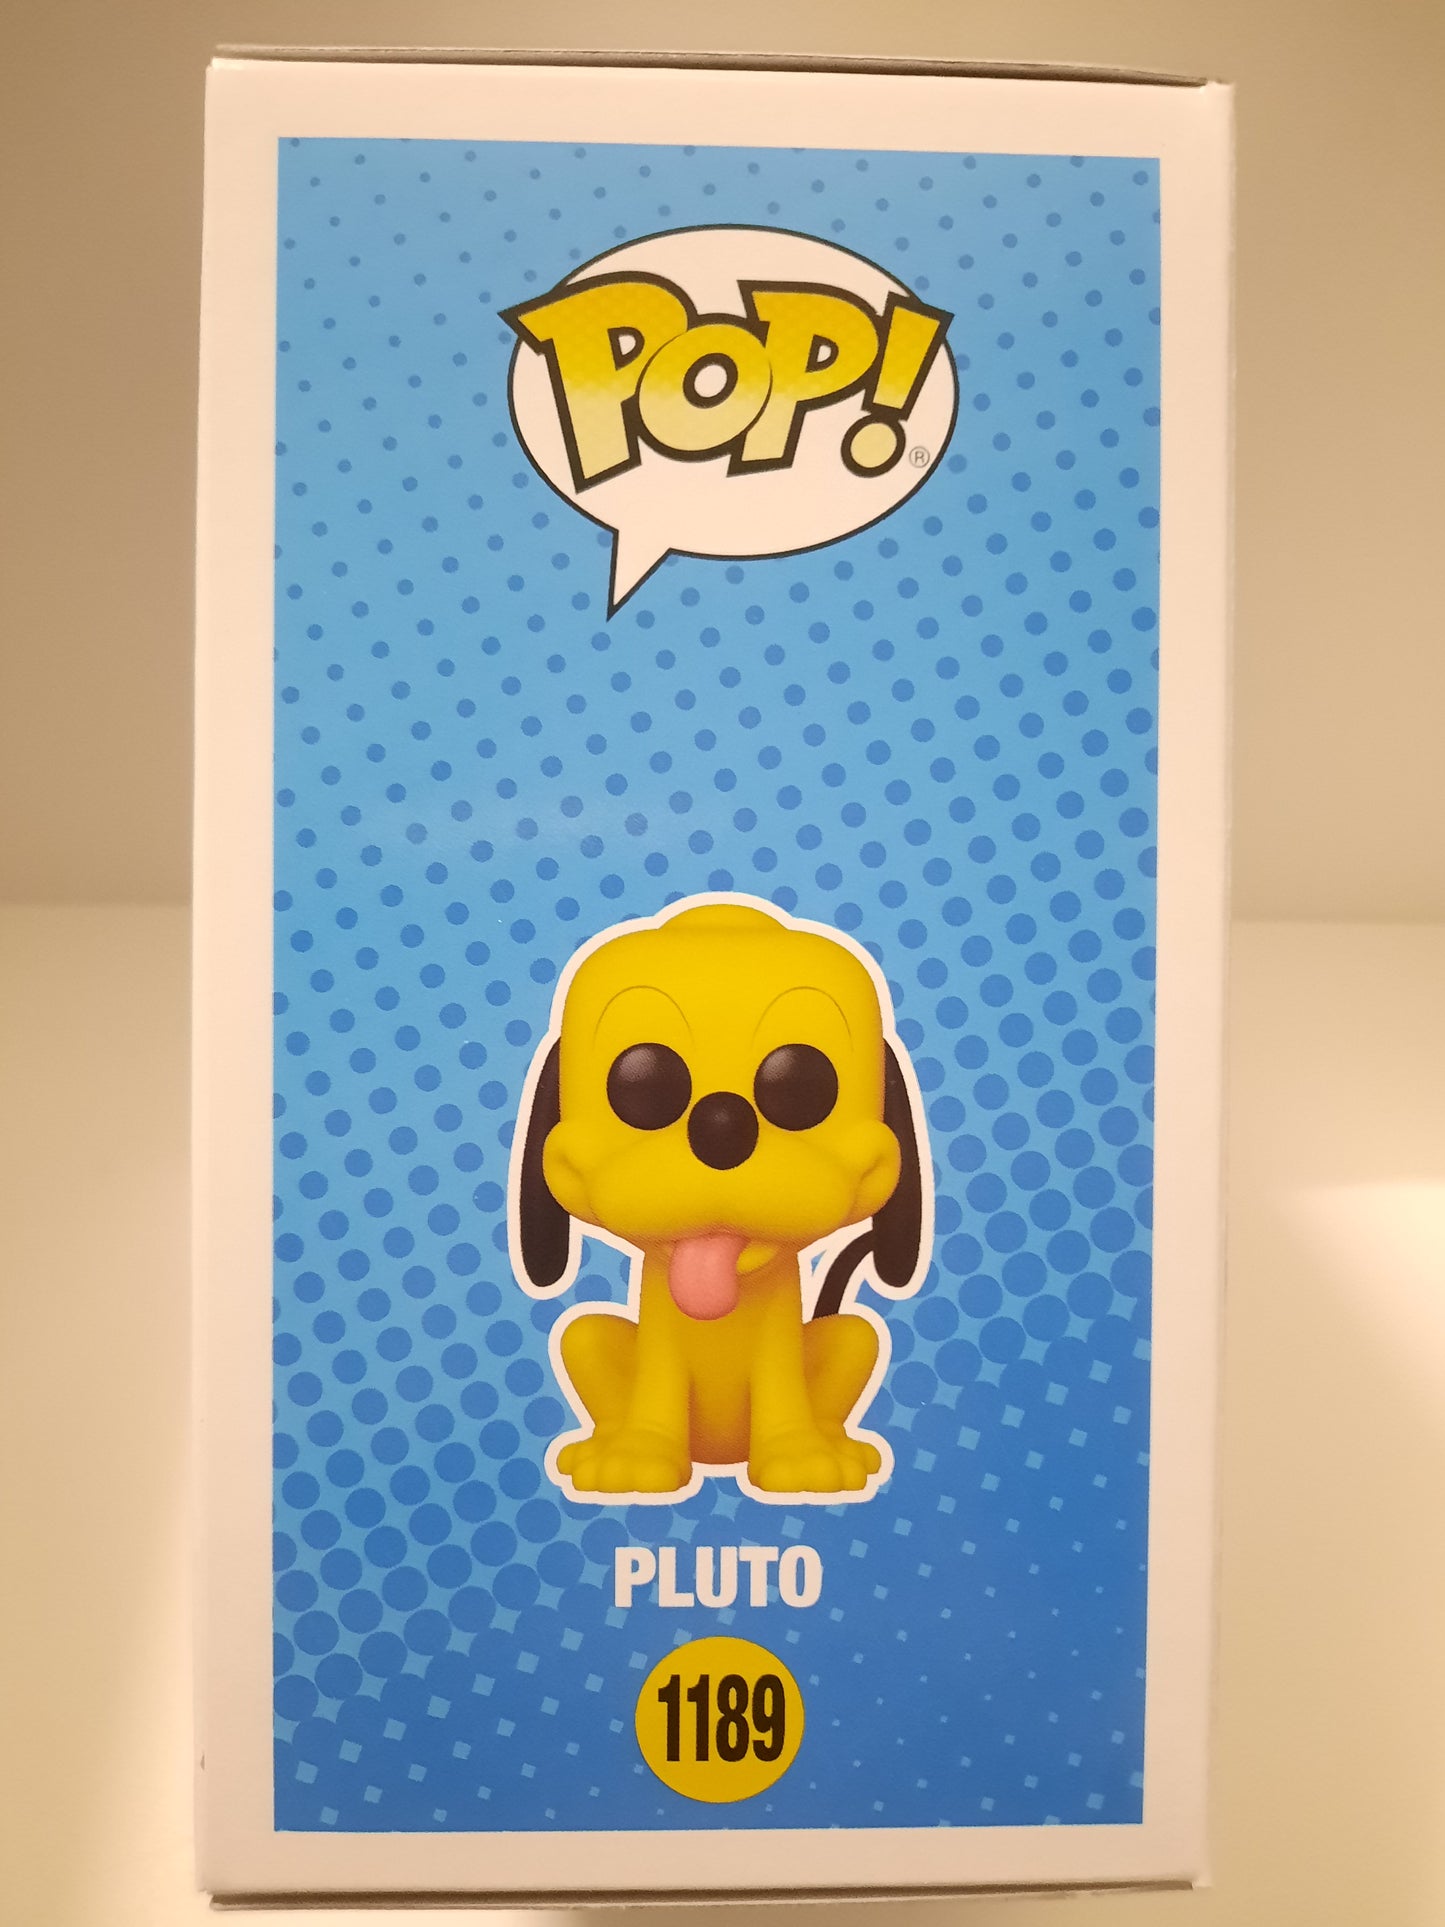 Funko Pop Pluto 1189 - Disney Mickey and Friends